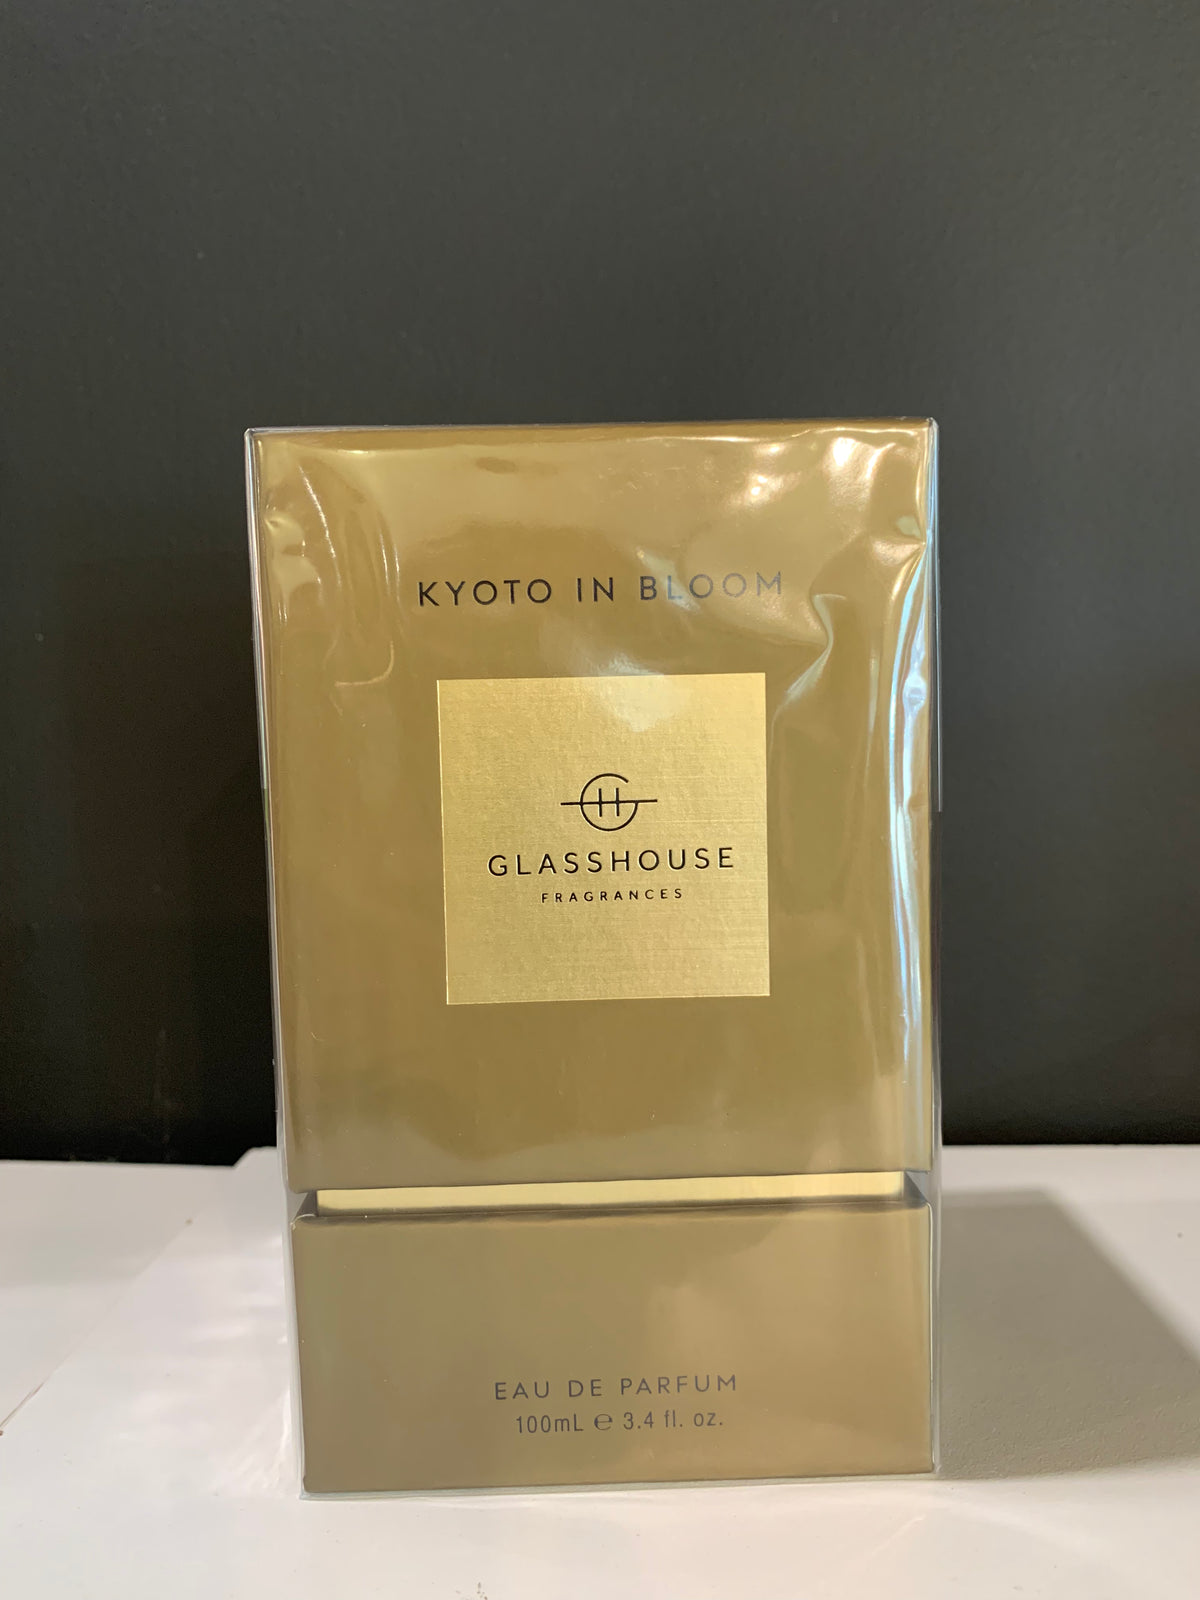 glasshouse fragrances | Kyoto in bloom 100ml perfume